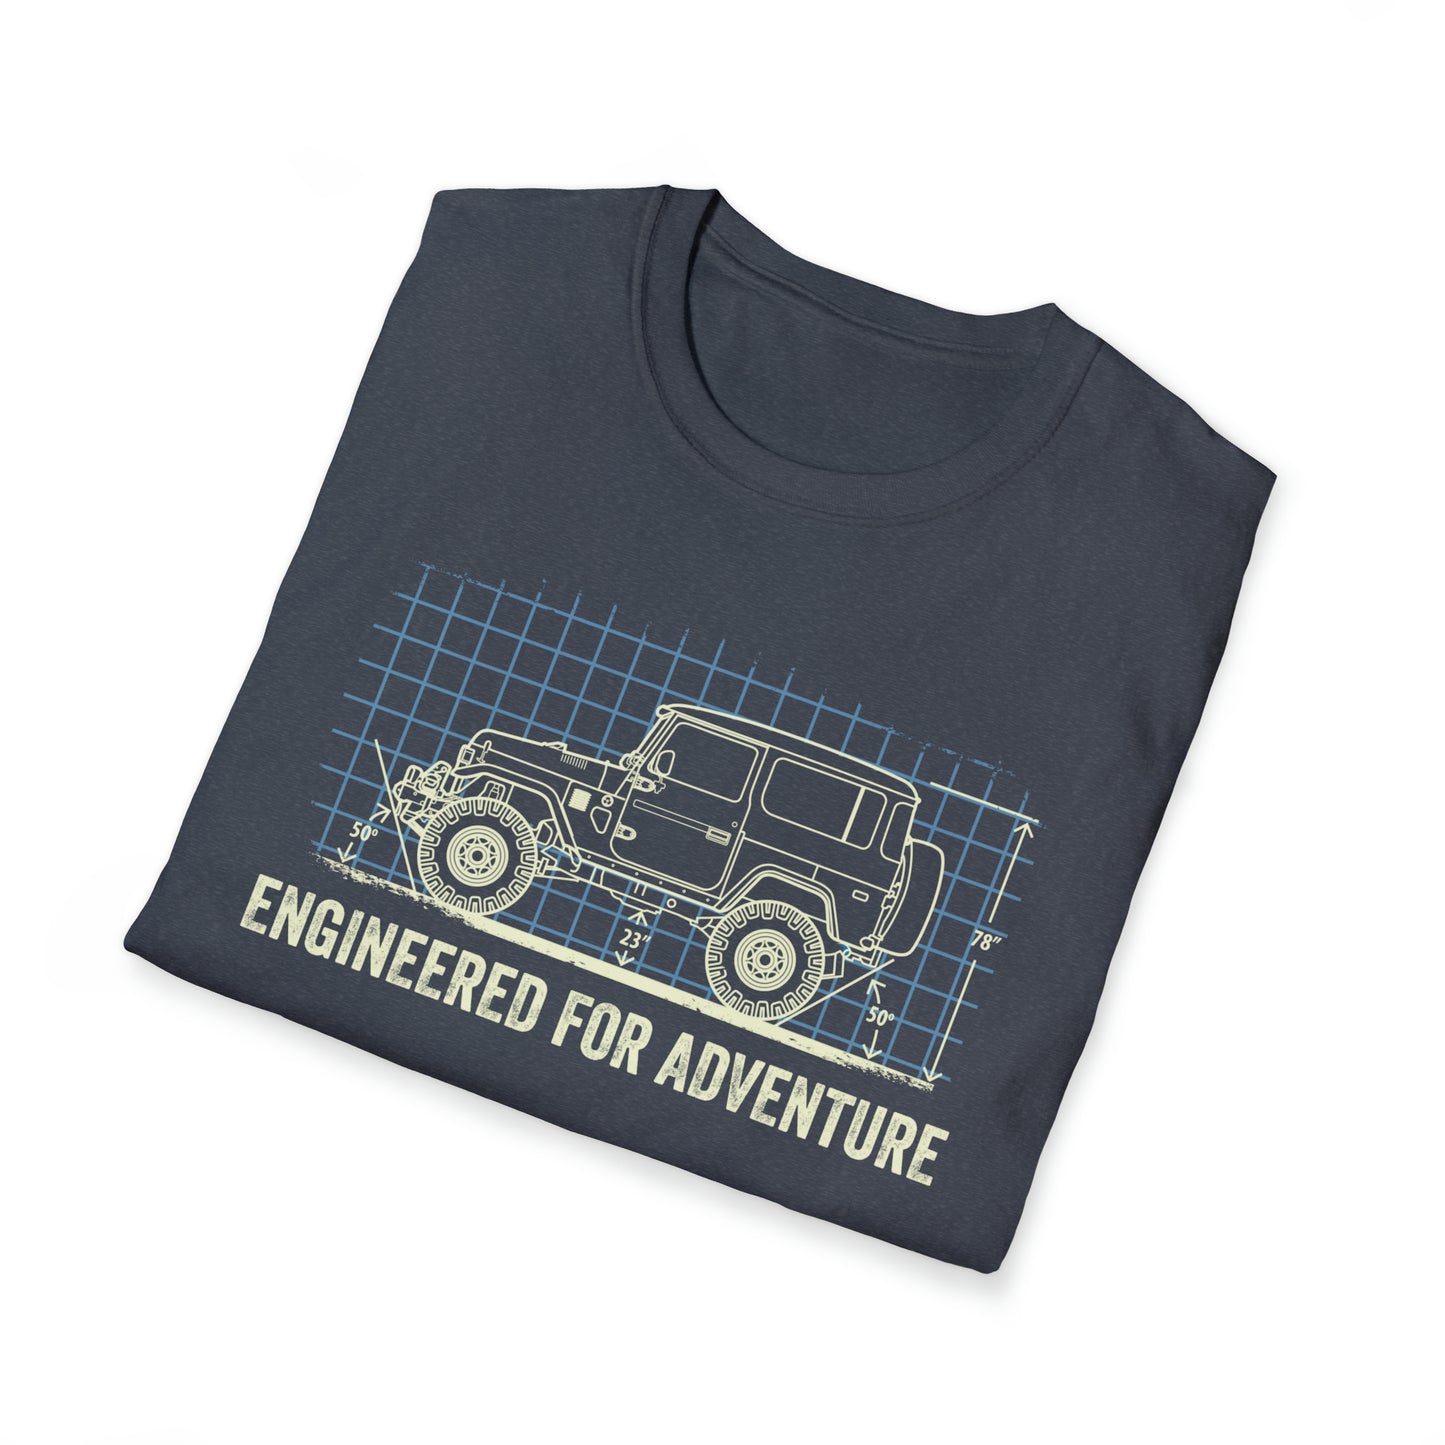 Engineered for Adventure: FJ40 Unisex Softstyle T-Shirt